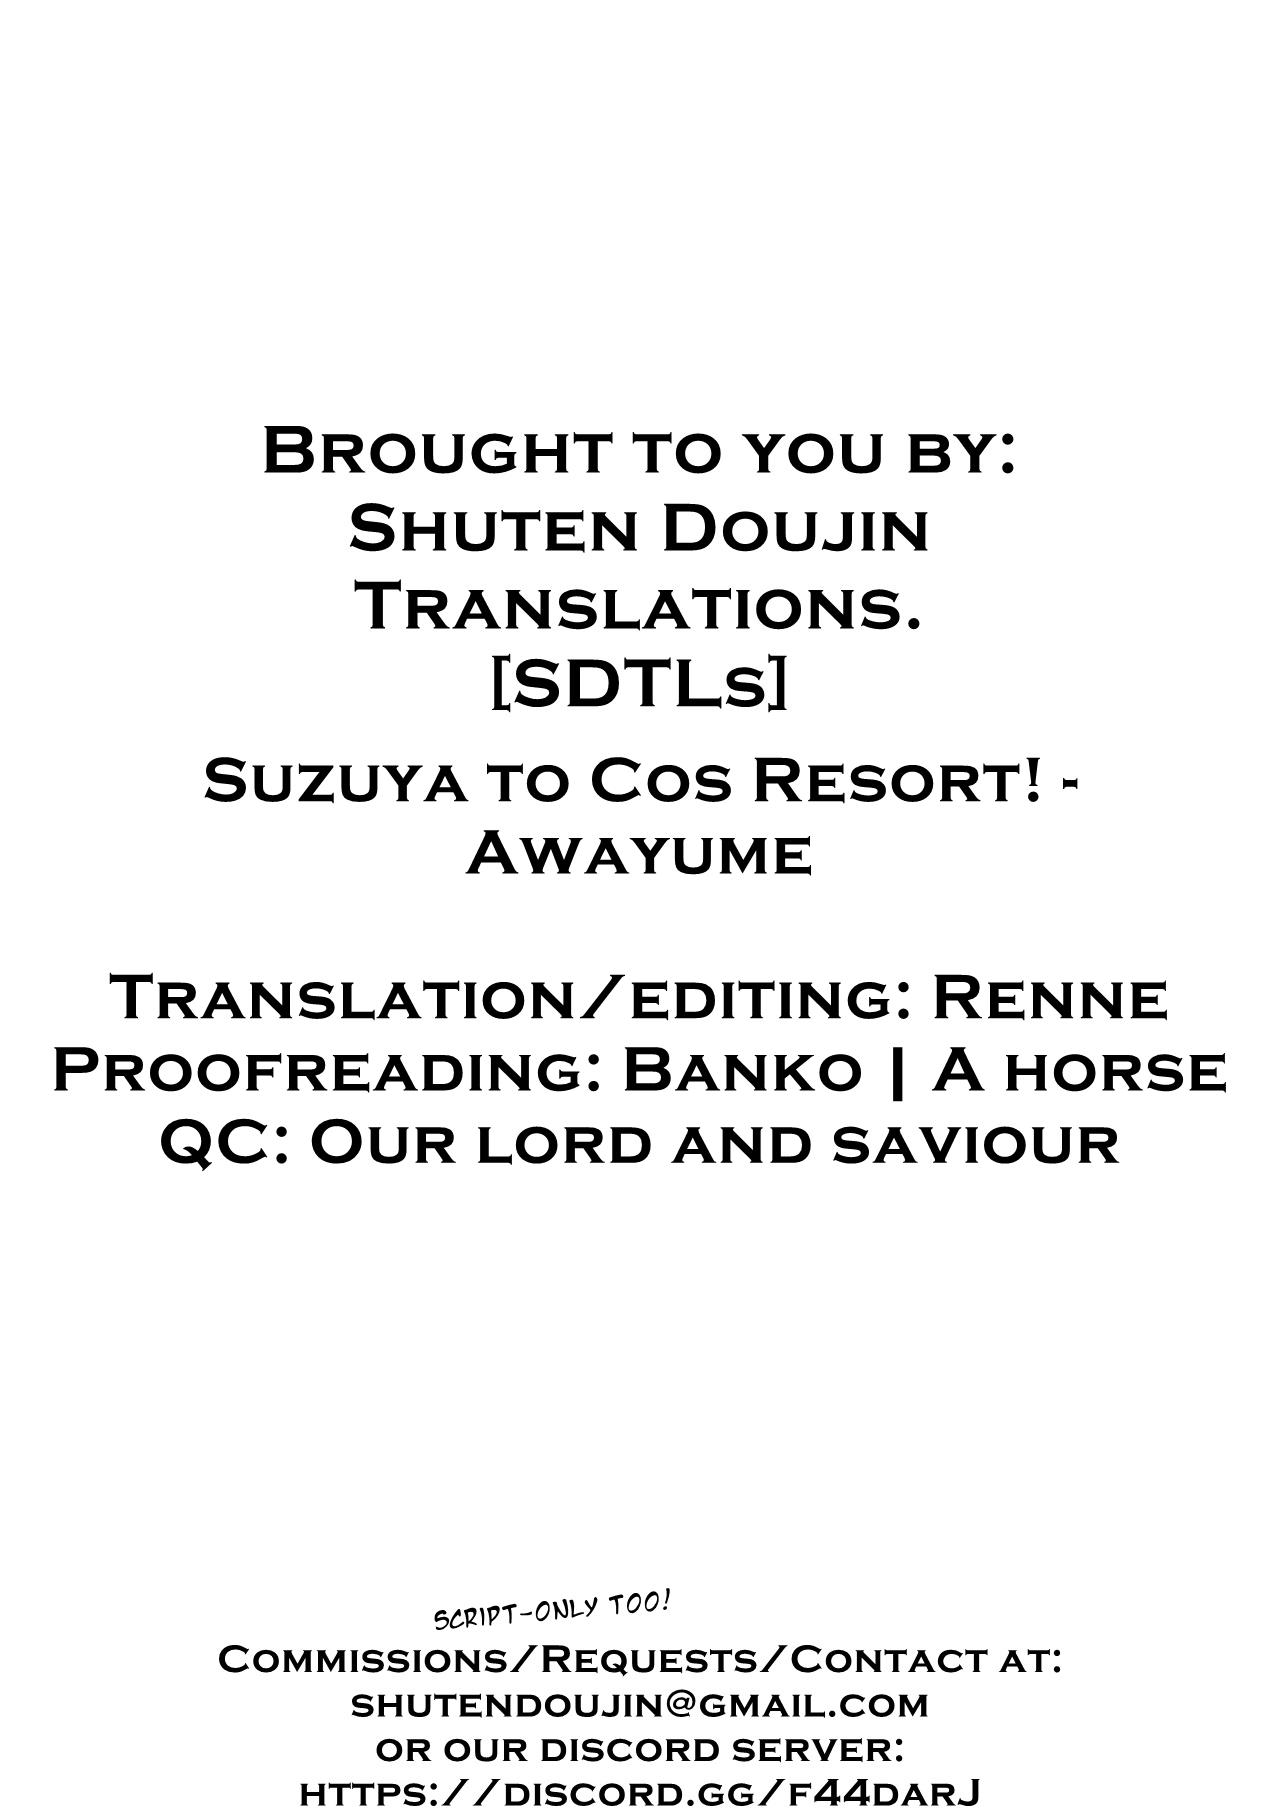 Suzuya to Cos Resort! 30